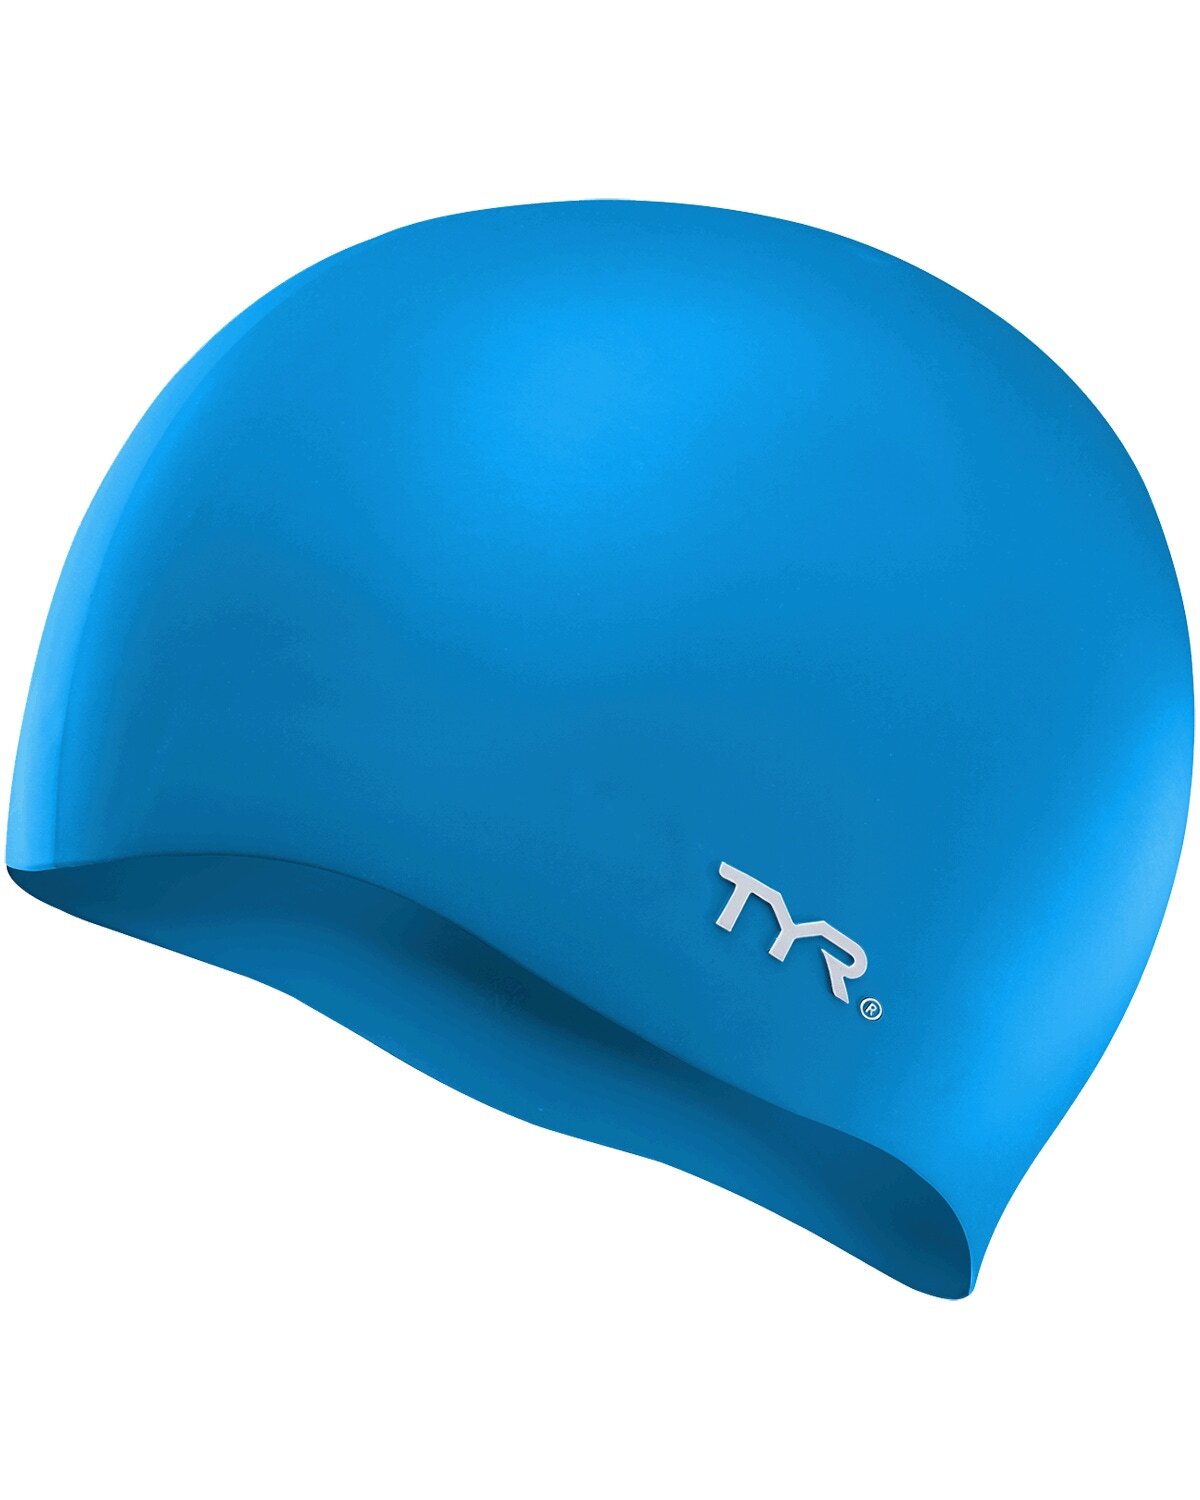 TYR Blue Wrinkle-Free Silicone Swim Cap